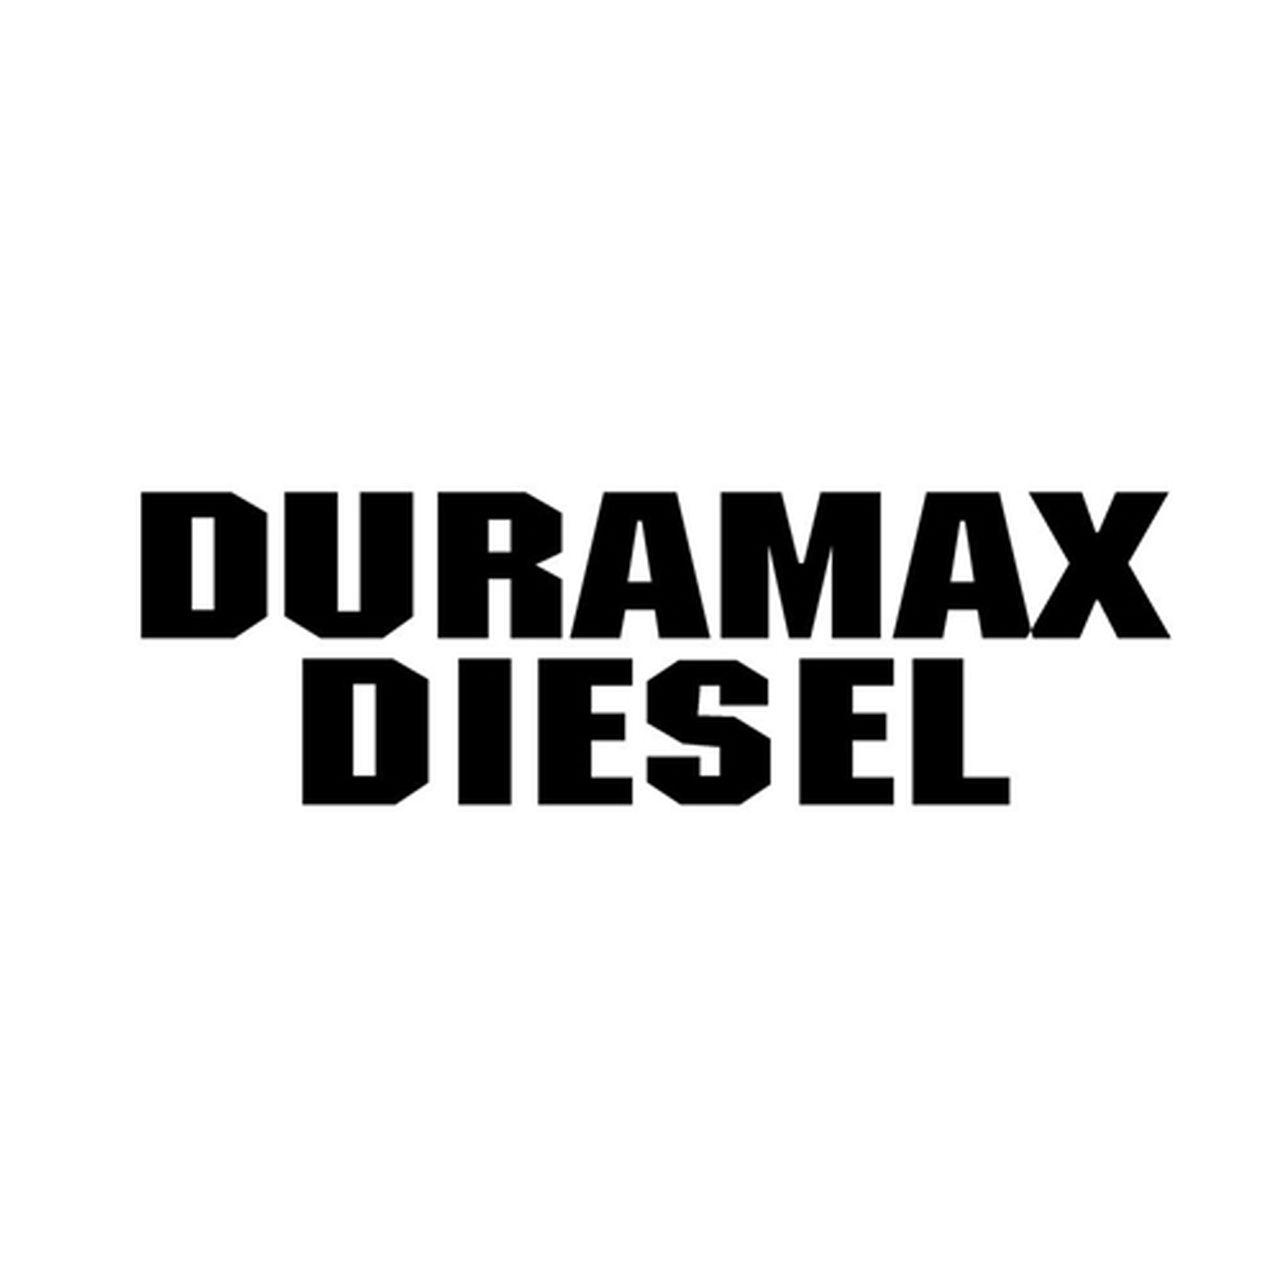 Drumax Logo - Duramax Diesel Text Logo Vinyl Decal